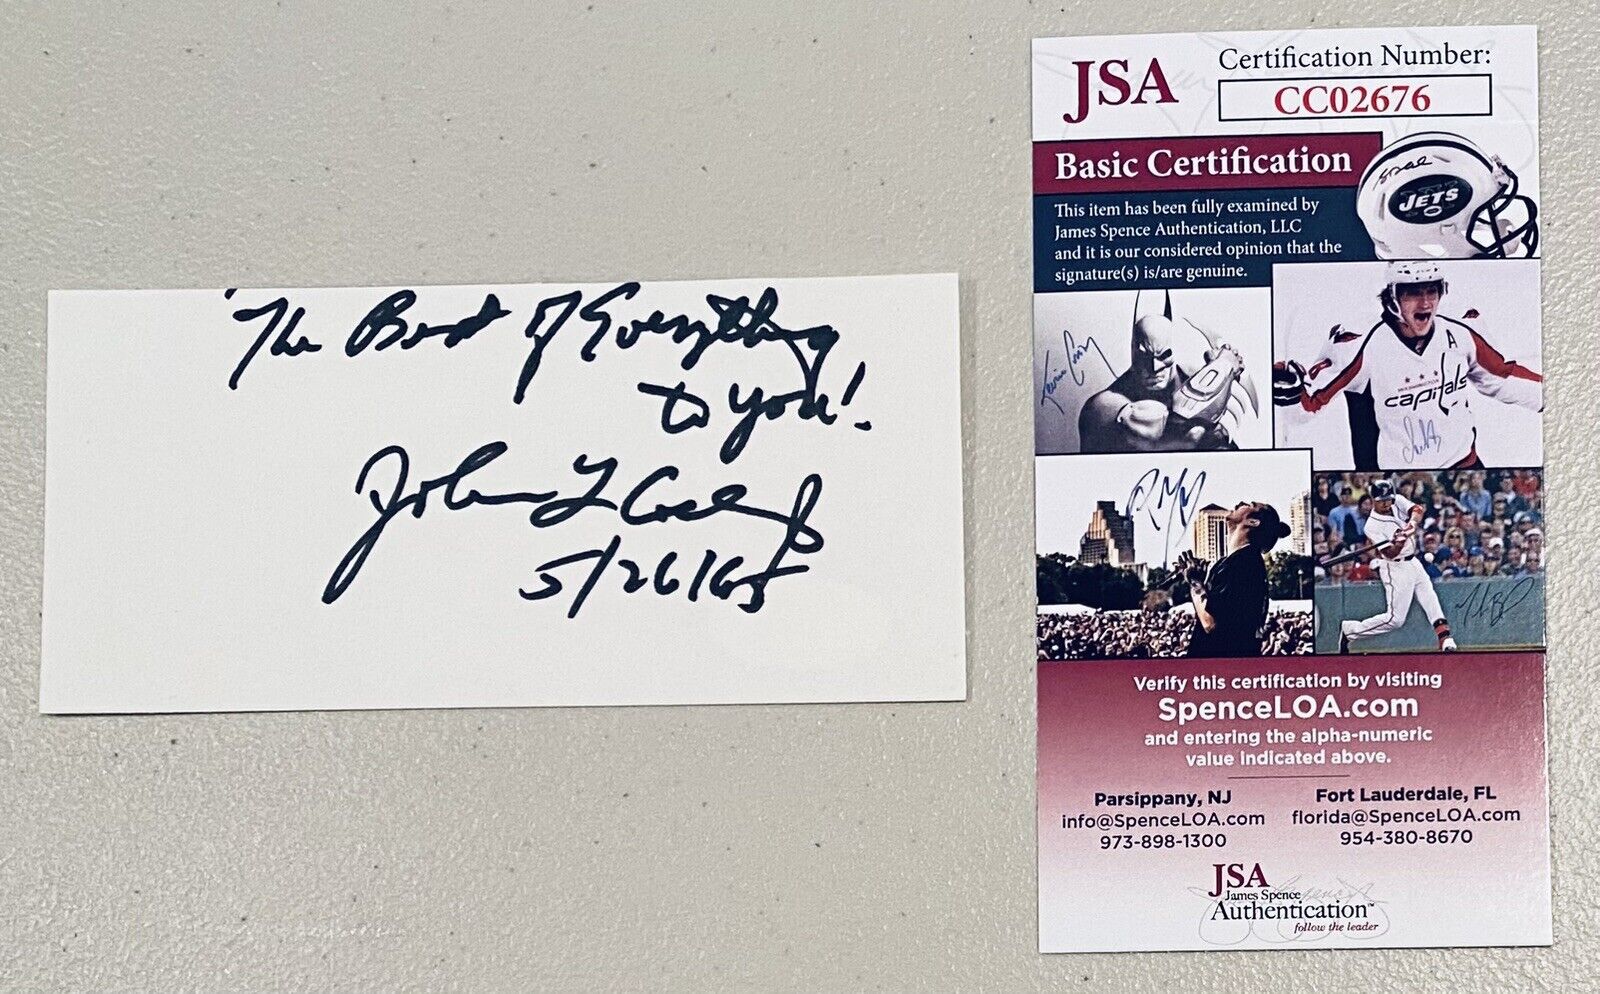 Johnnie Cochran Signed Autographed 2.5 x 5 Card JSA Cert OJ Simpson Trial Lawyer